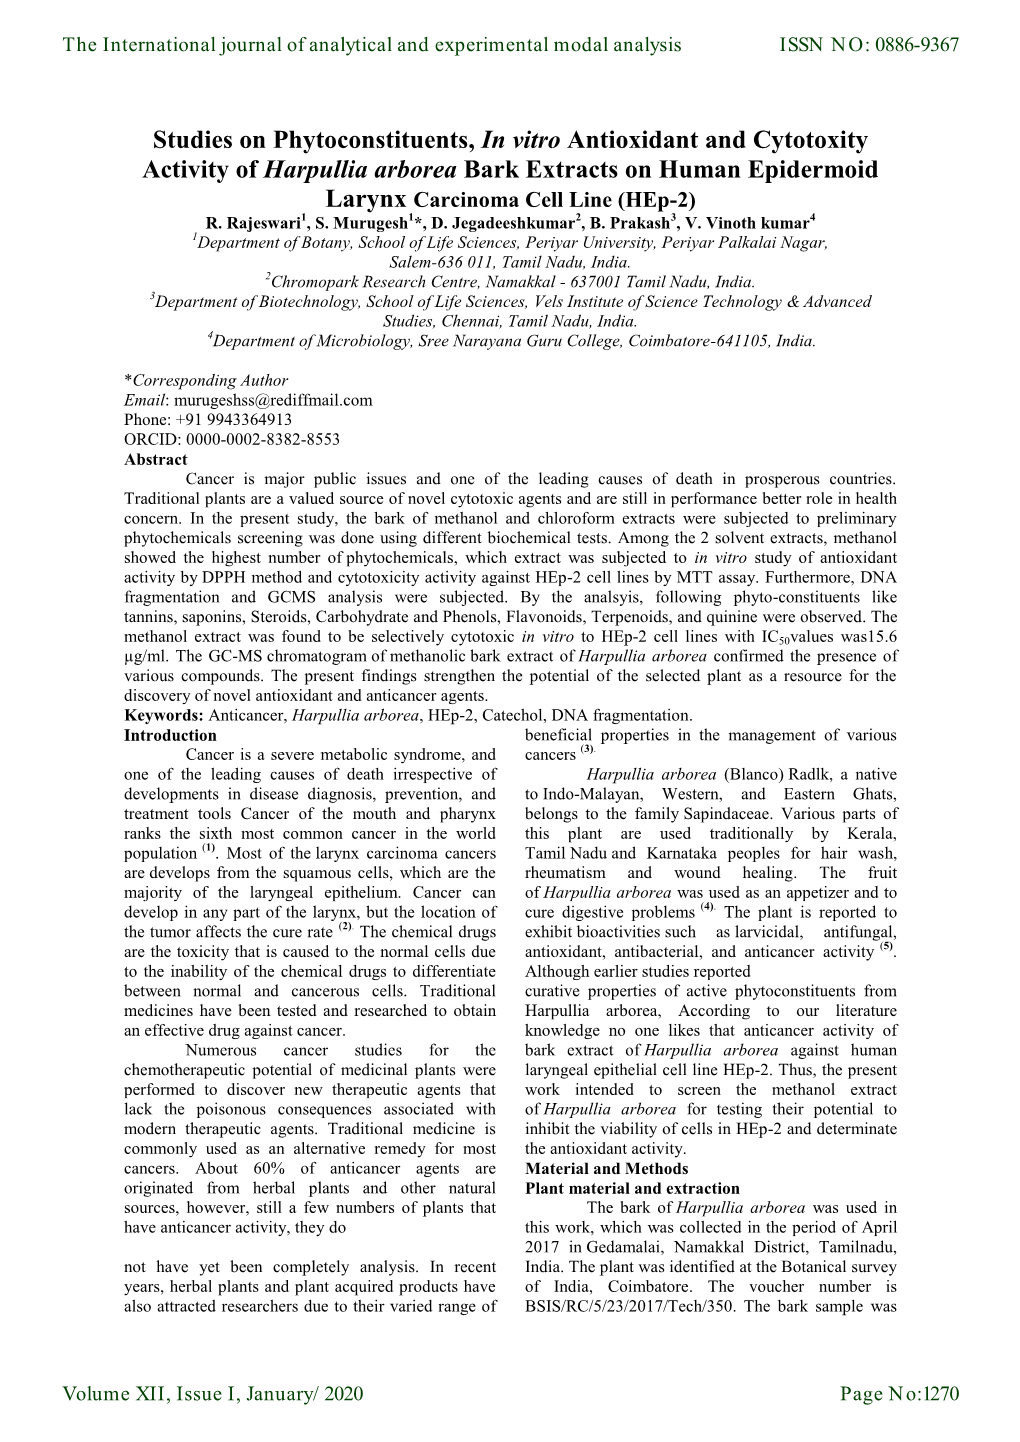 Studies on Phytoconstituents, in Vitro Antioxidant and Cytotoxity Activity of Harpullia Arborea Bark Extracts on Human Epidermoid Larynx Carcinoma Cell Line (Hep-2) R